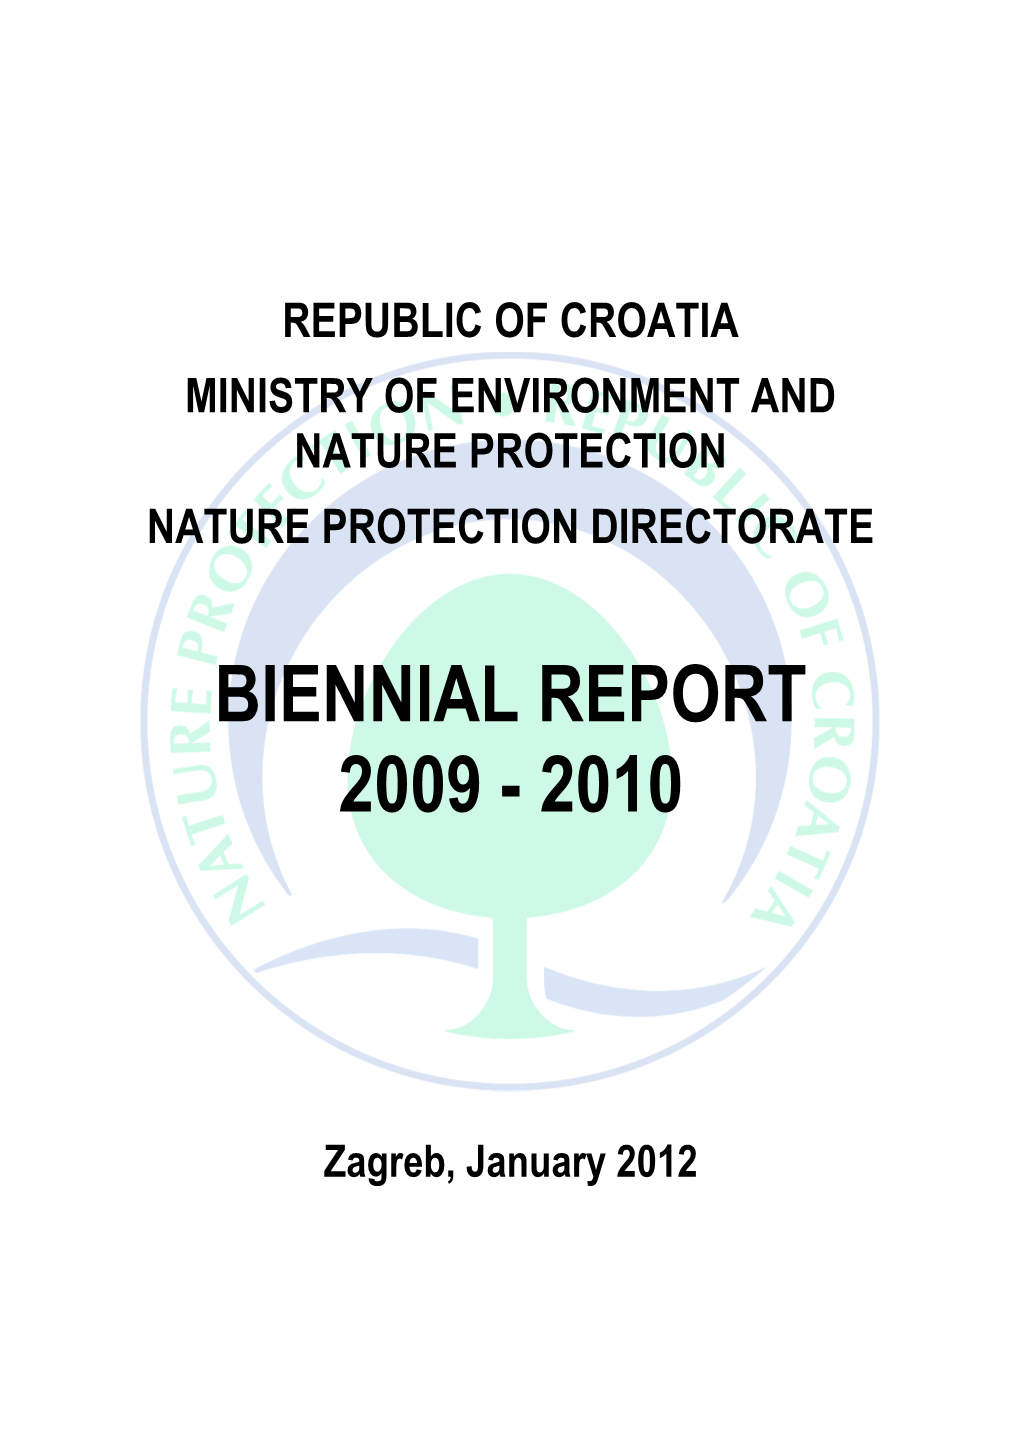 Biennial Report 2009 - 2010